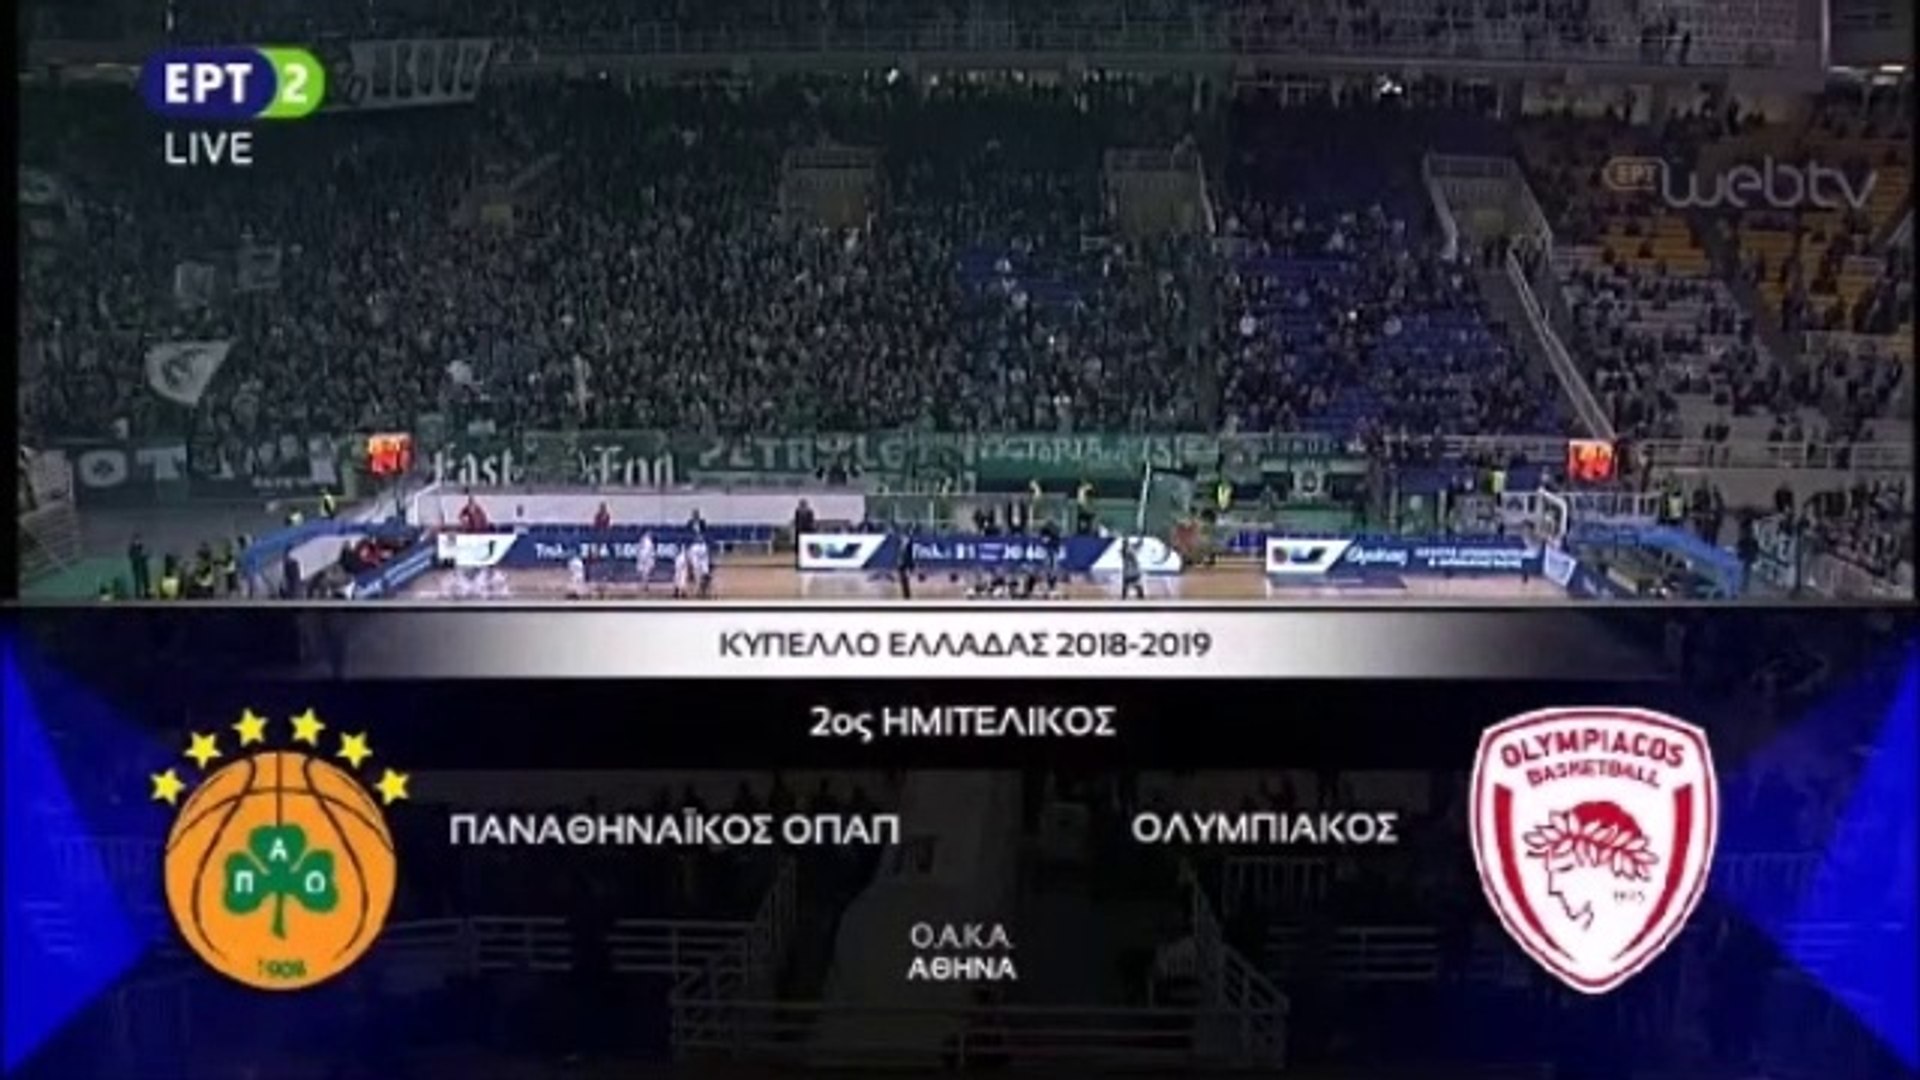 Panathinaikos vs Olympiakos - Game Interrupted - Full Highlights 13.02.2019  - video Dailymotion